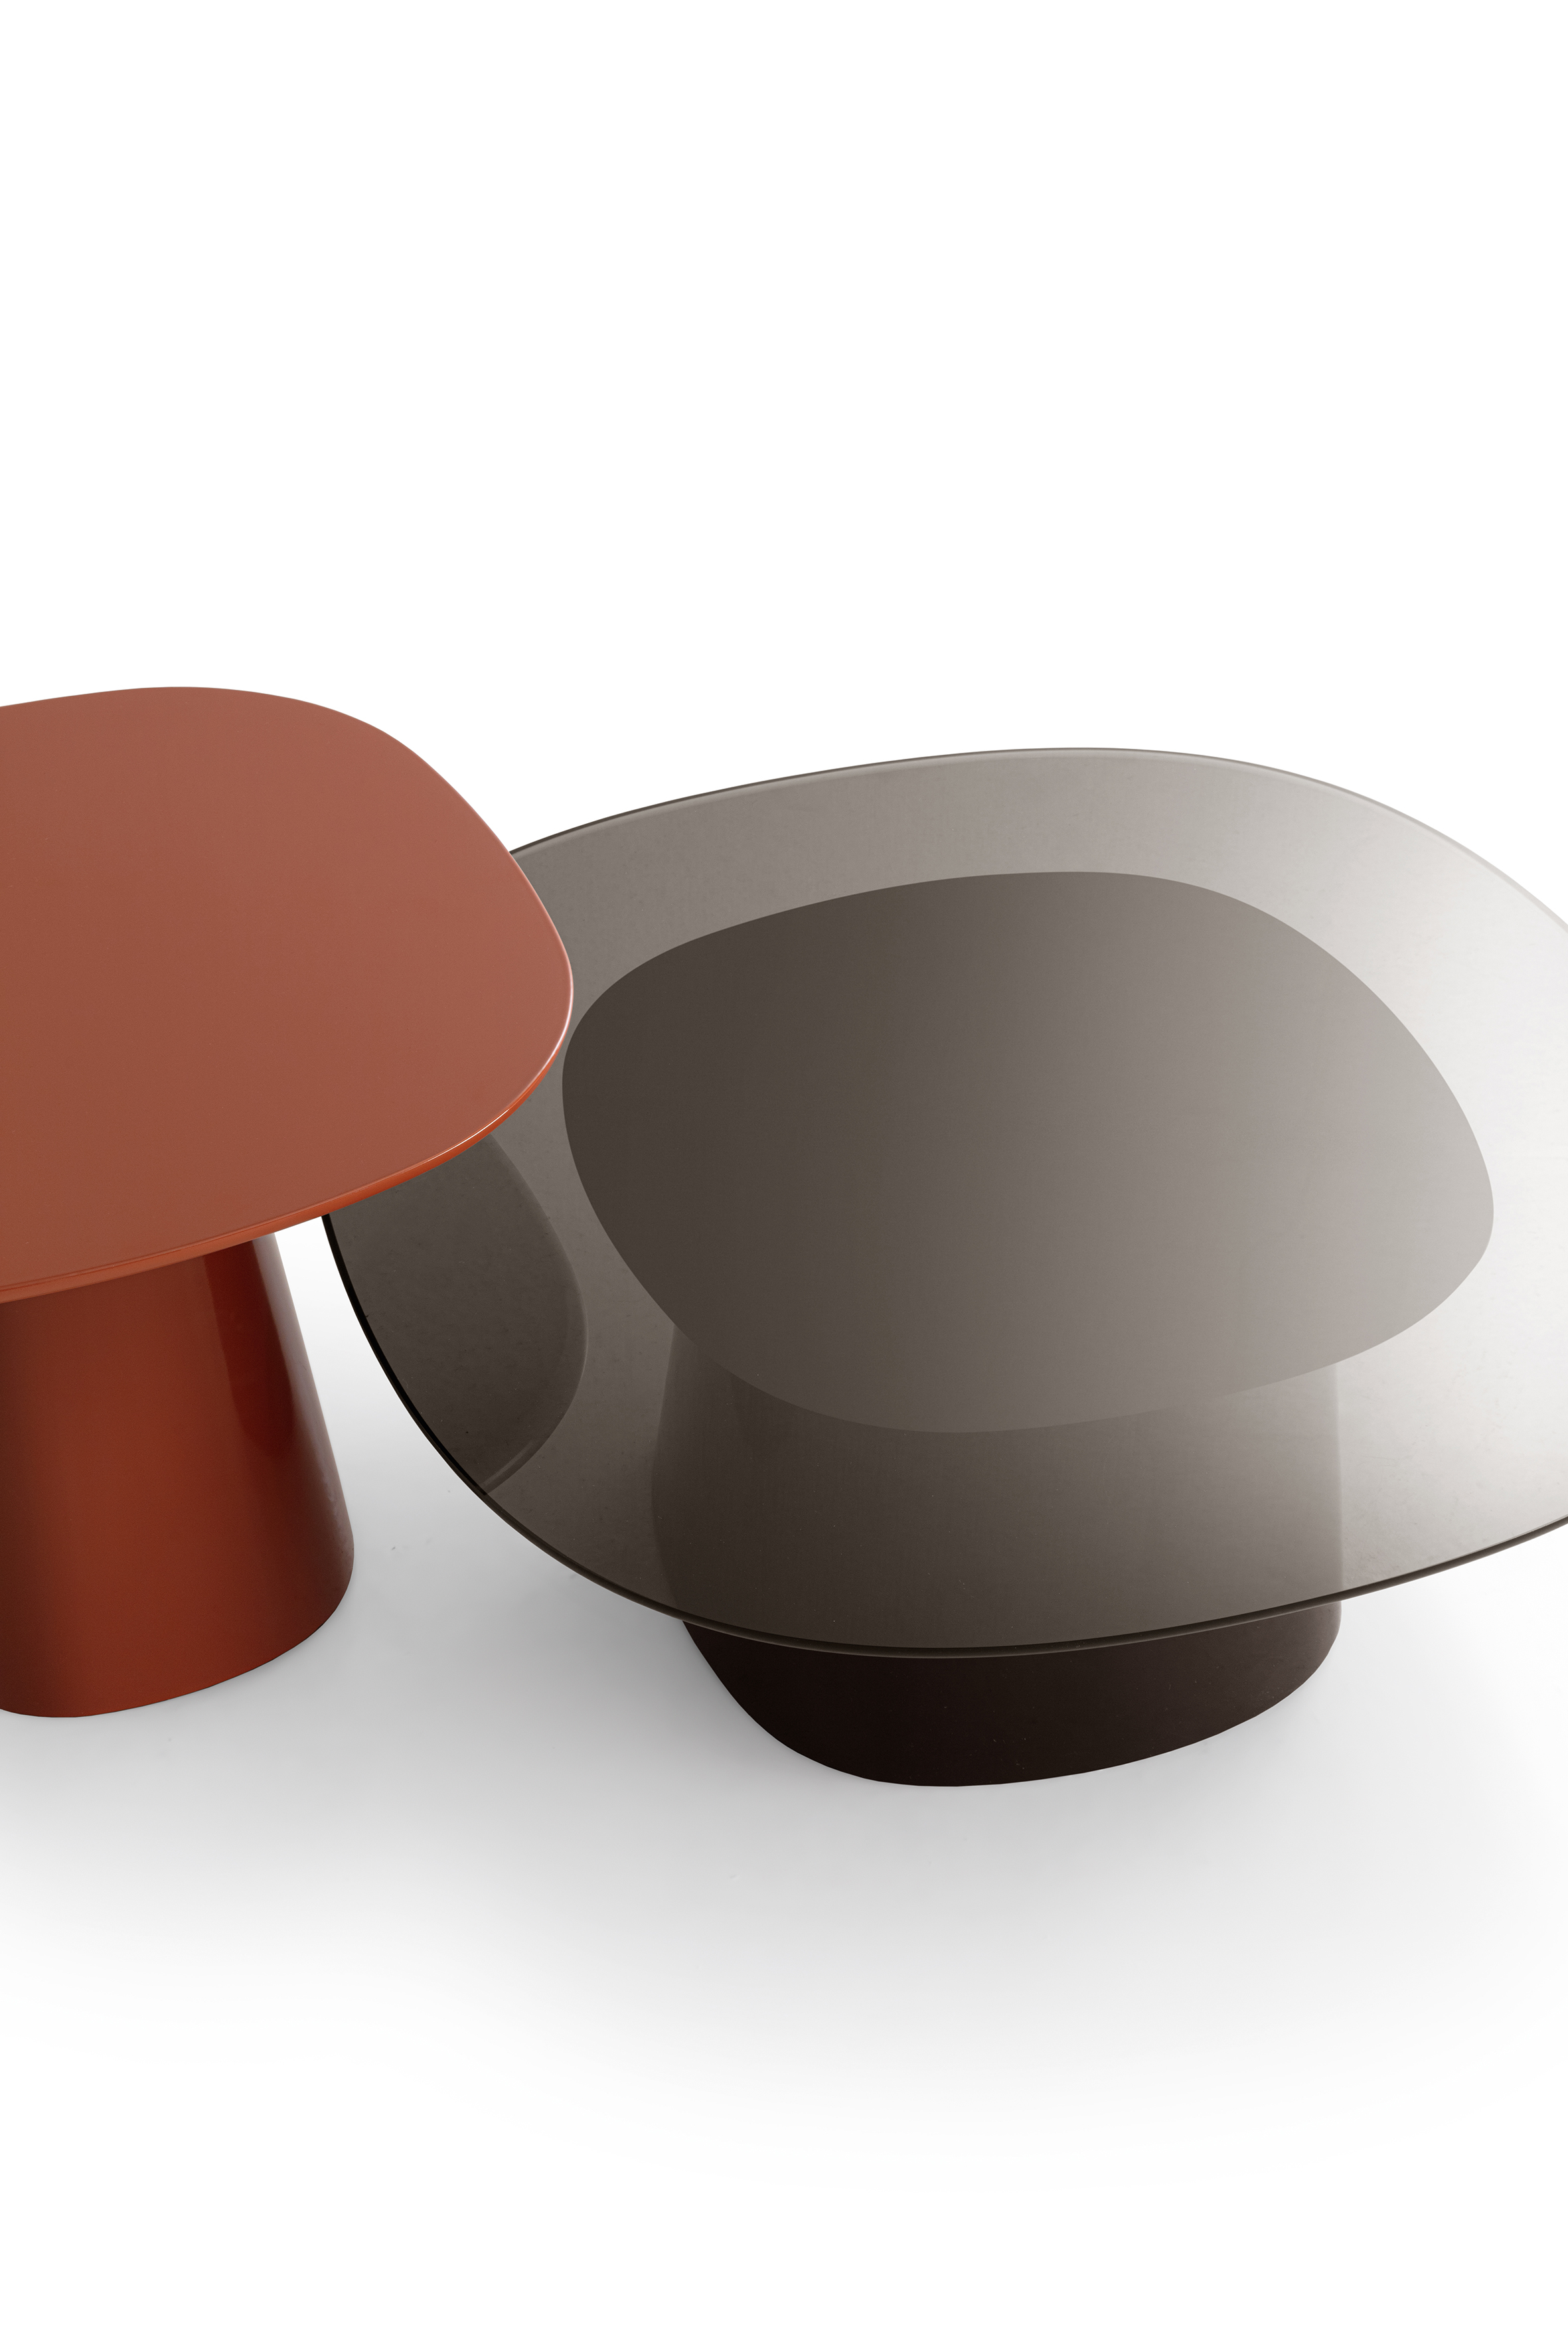 Milan Design Week B&B Italia Allure O'Dot coffee table in red metal and black glass